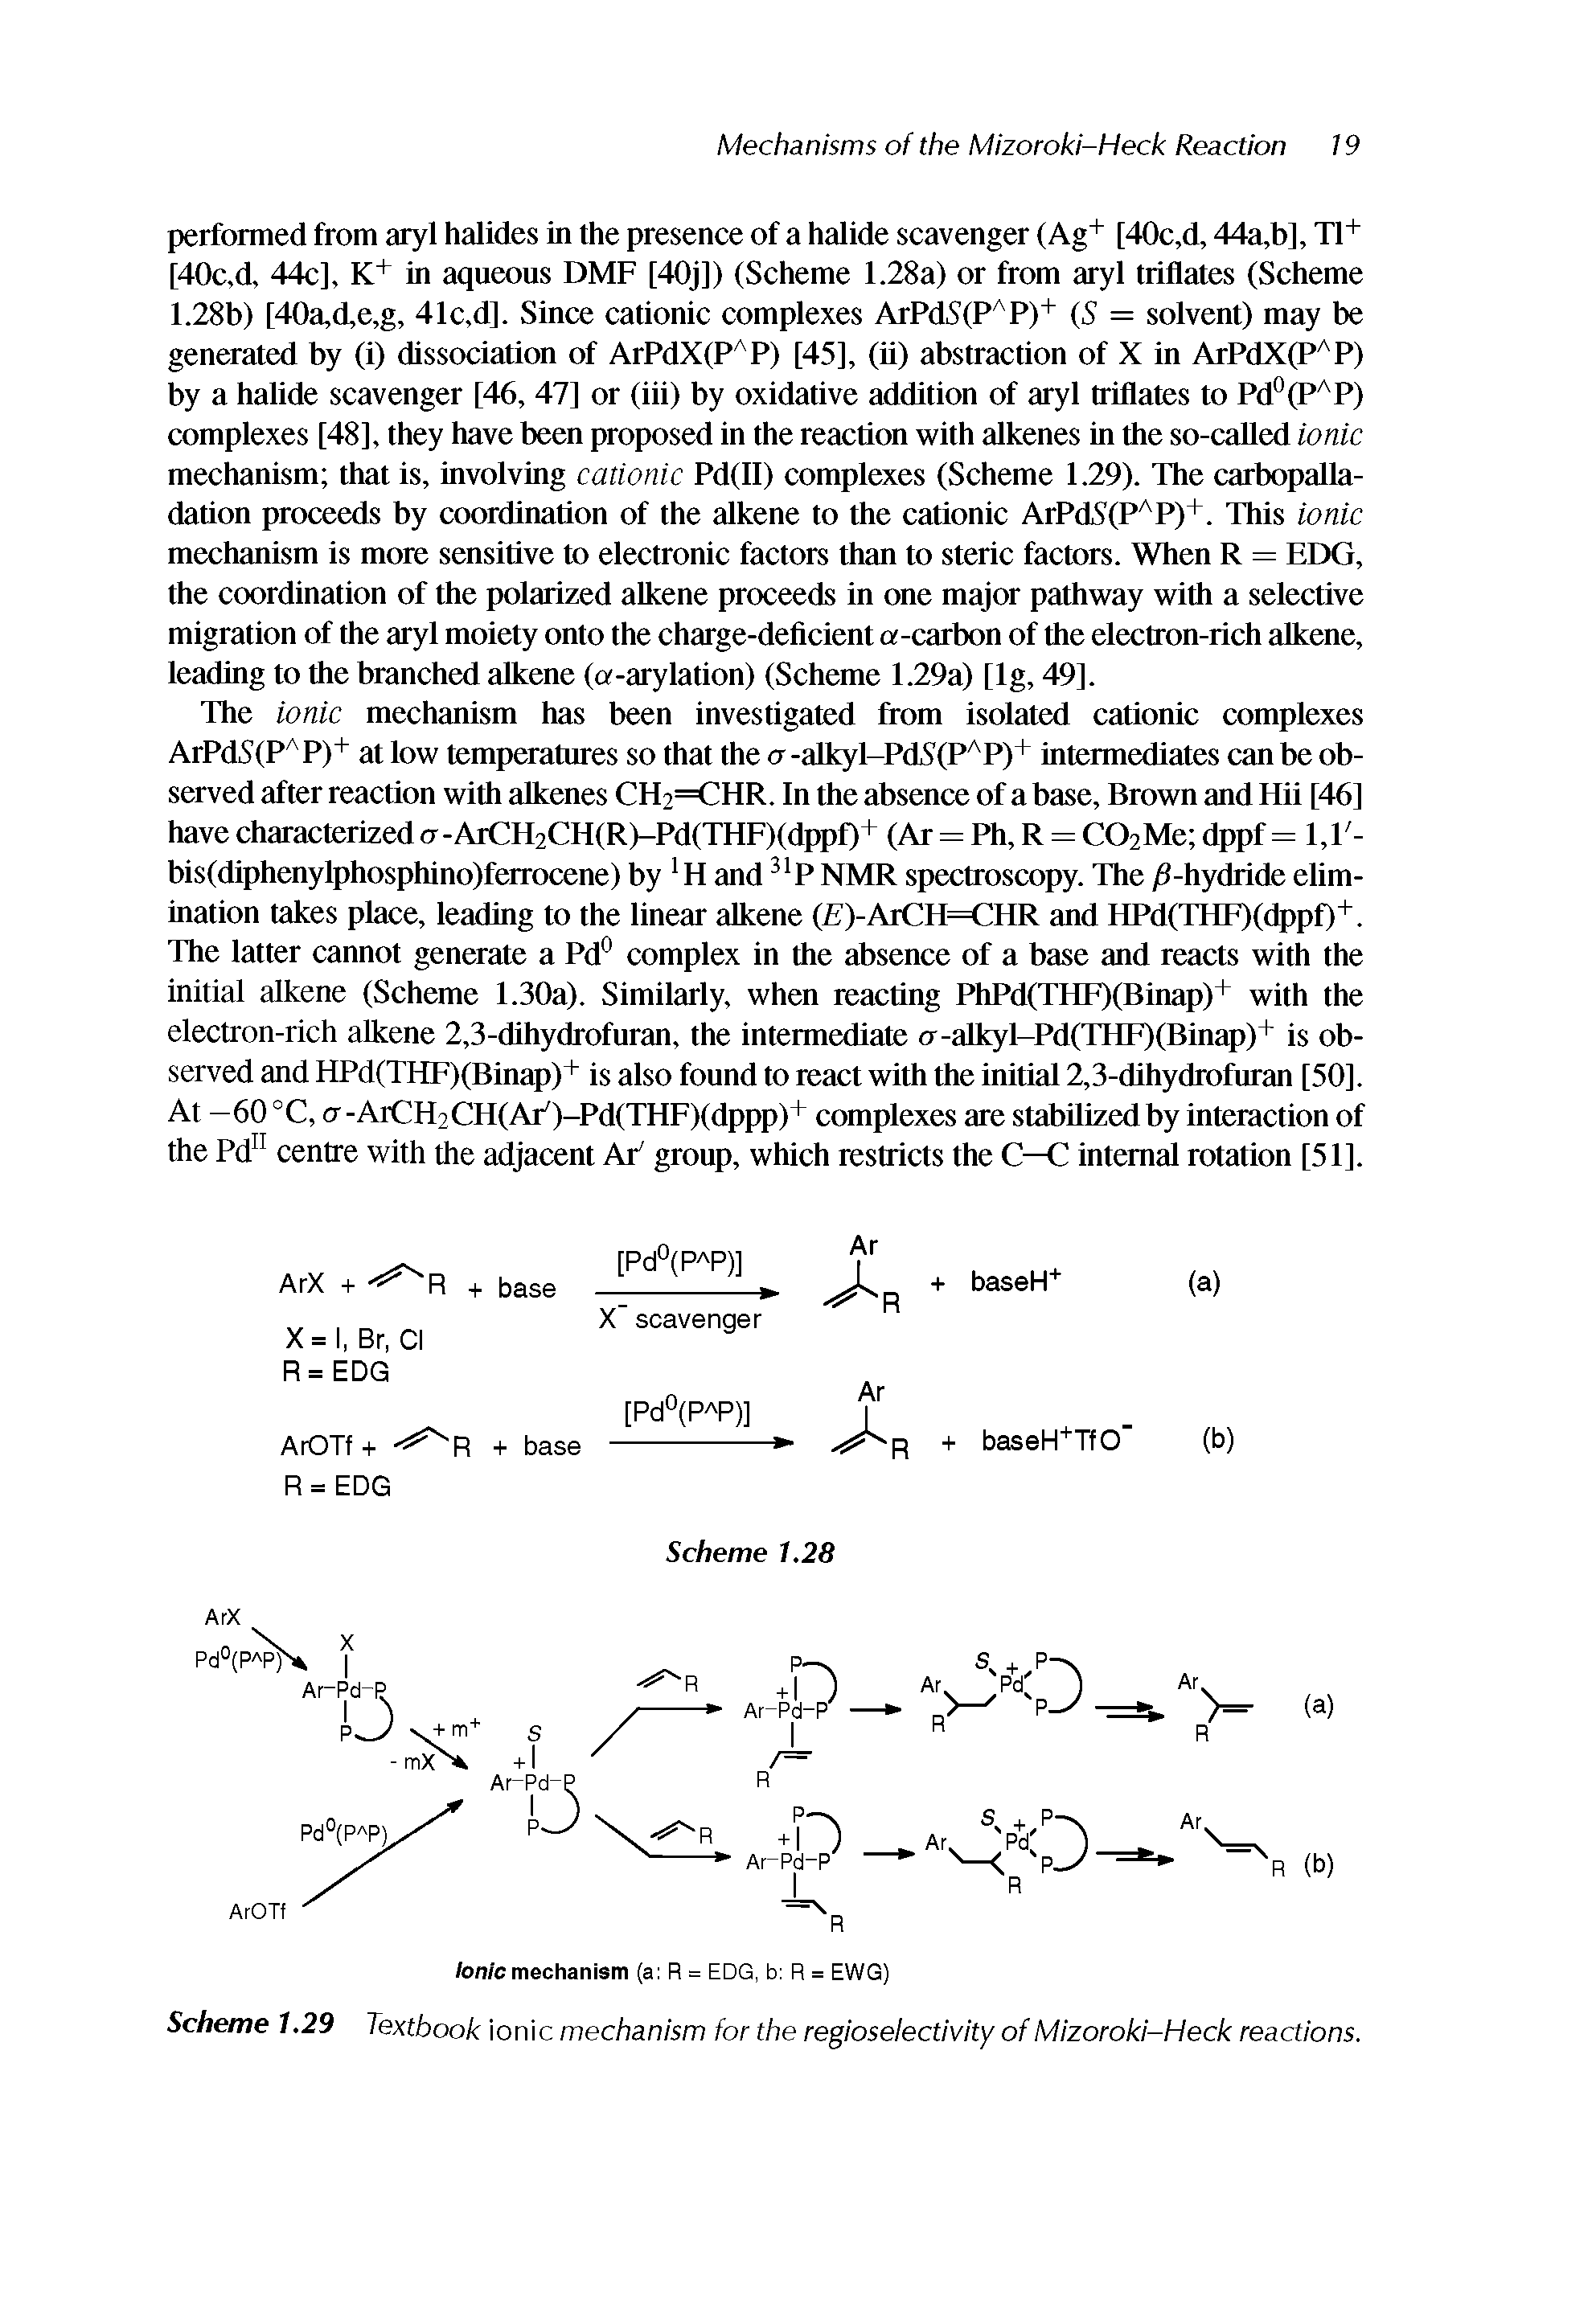 Scheme 1.29 Textbook ionic mechanism for the regioselectivity of Mizoroki-Heck reactions.